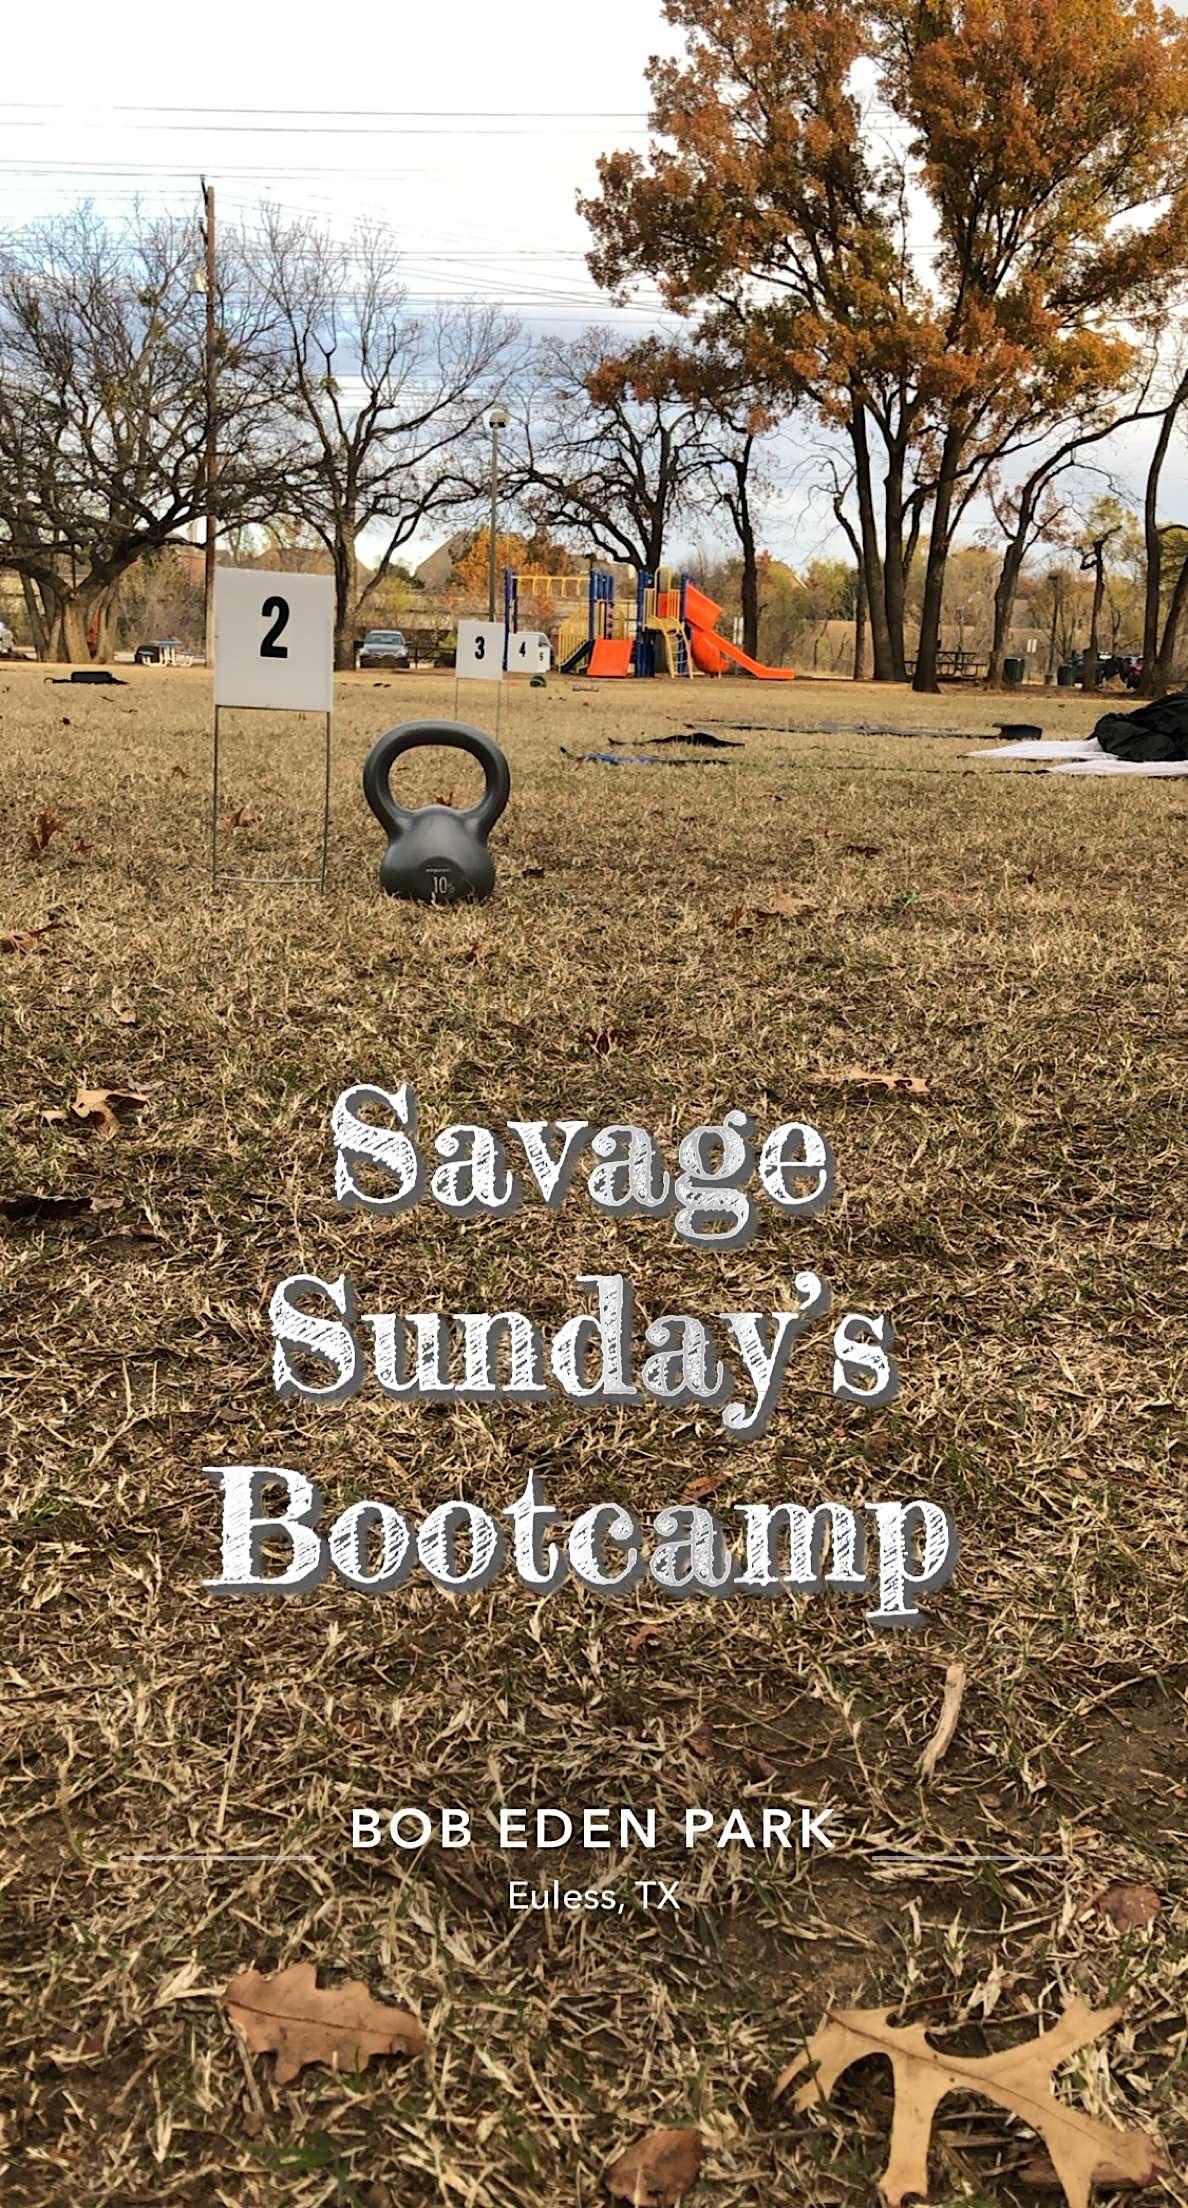 Savage Sunday’s Bootcamp
Sun Oct 30, 9:00 AM - Sun Oct 30, 10:00 AM
in 9 days